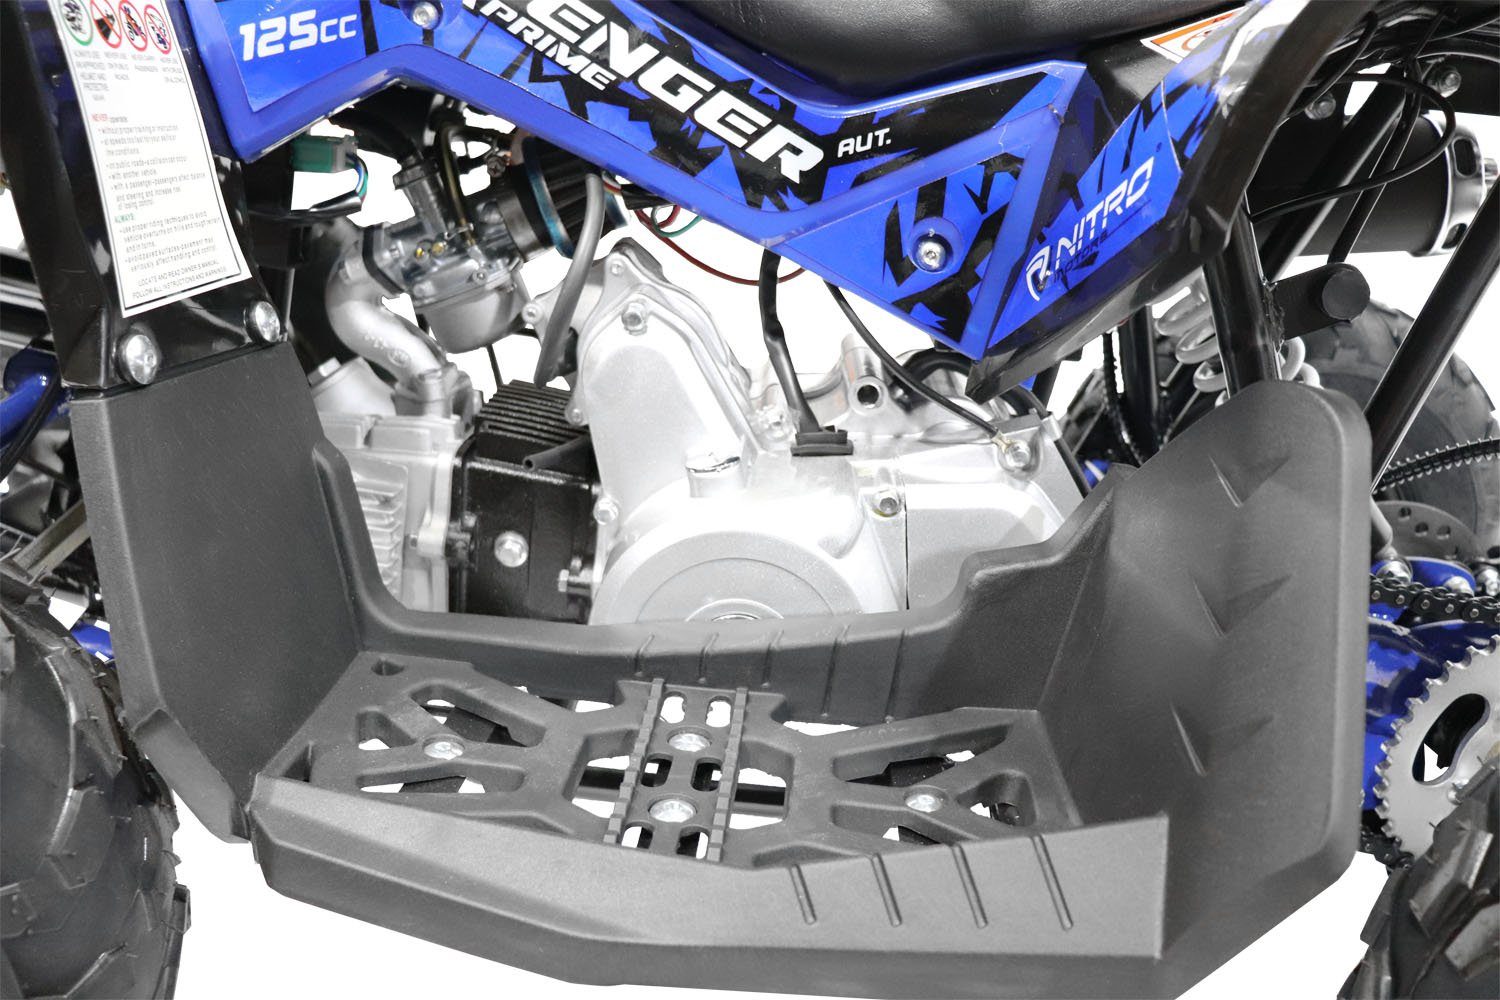 125,00 Midiquad, Blau Nitro 125cc RG6-A Quad Motors Avenger midi ccm Quad Kinderquad Kinder